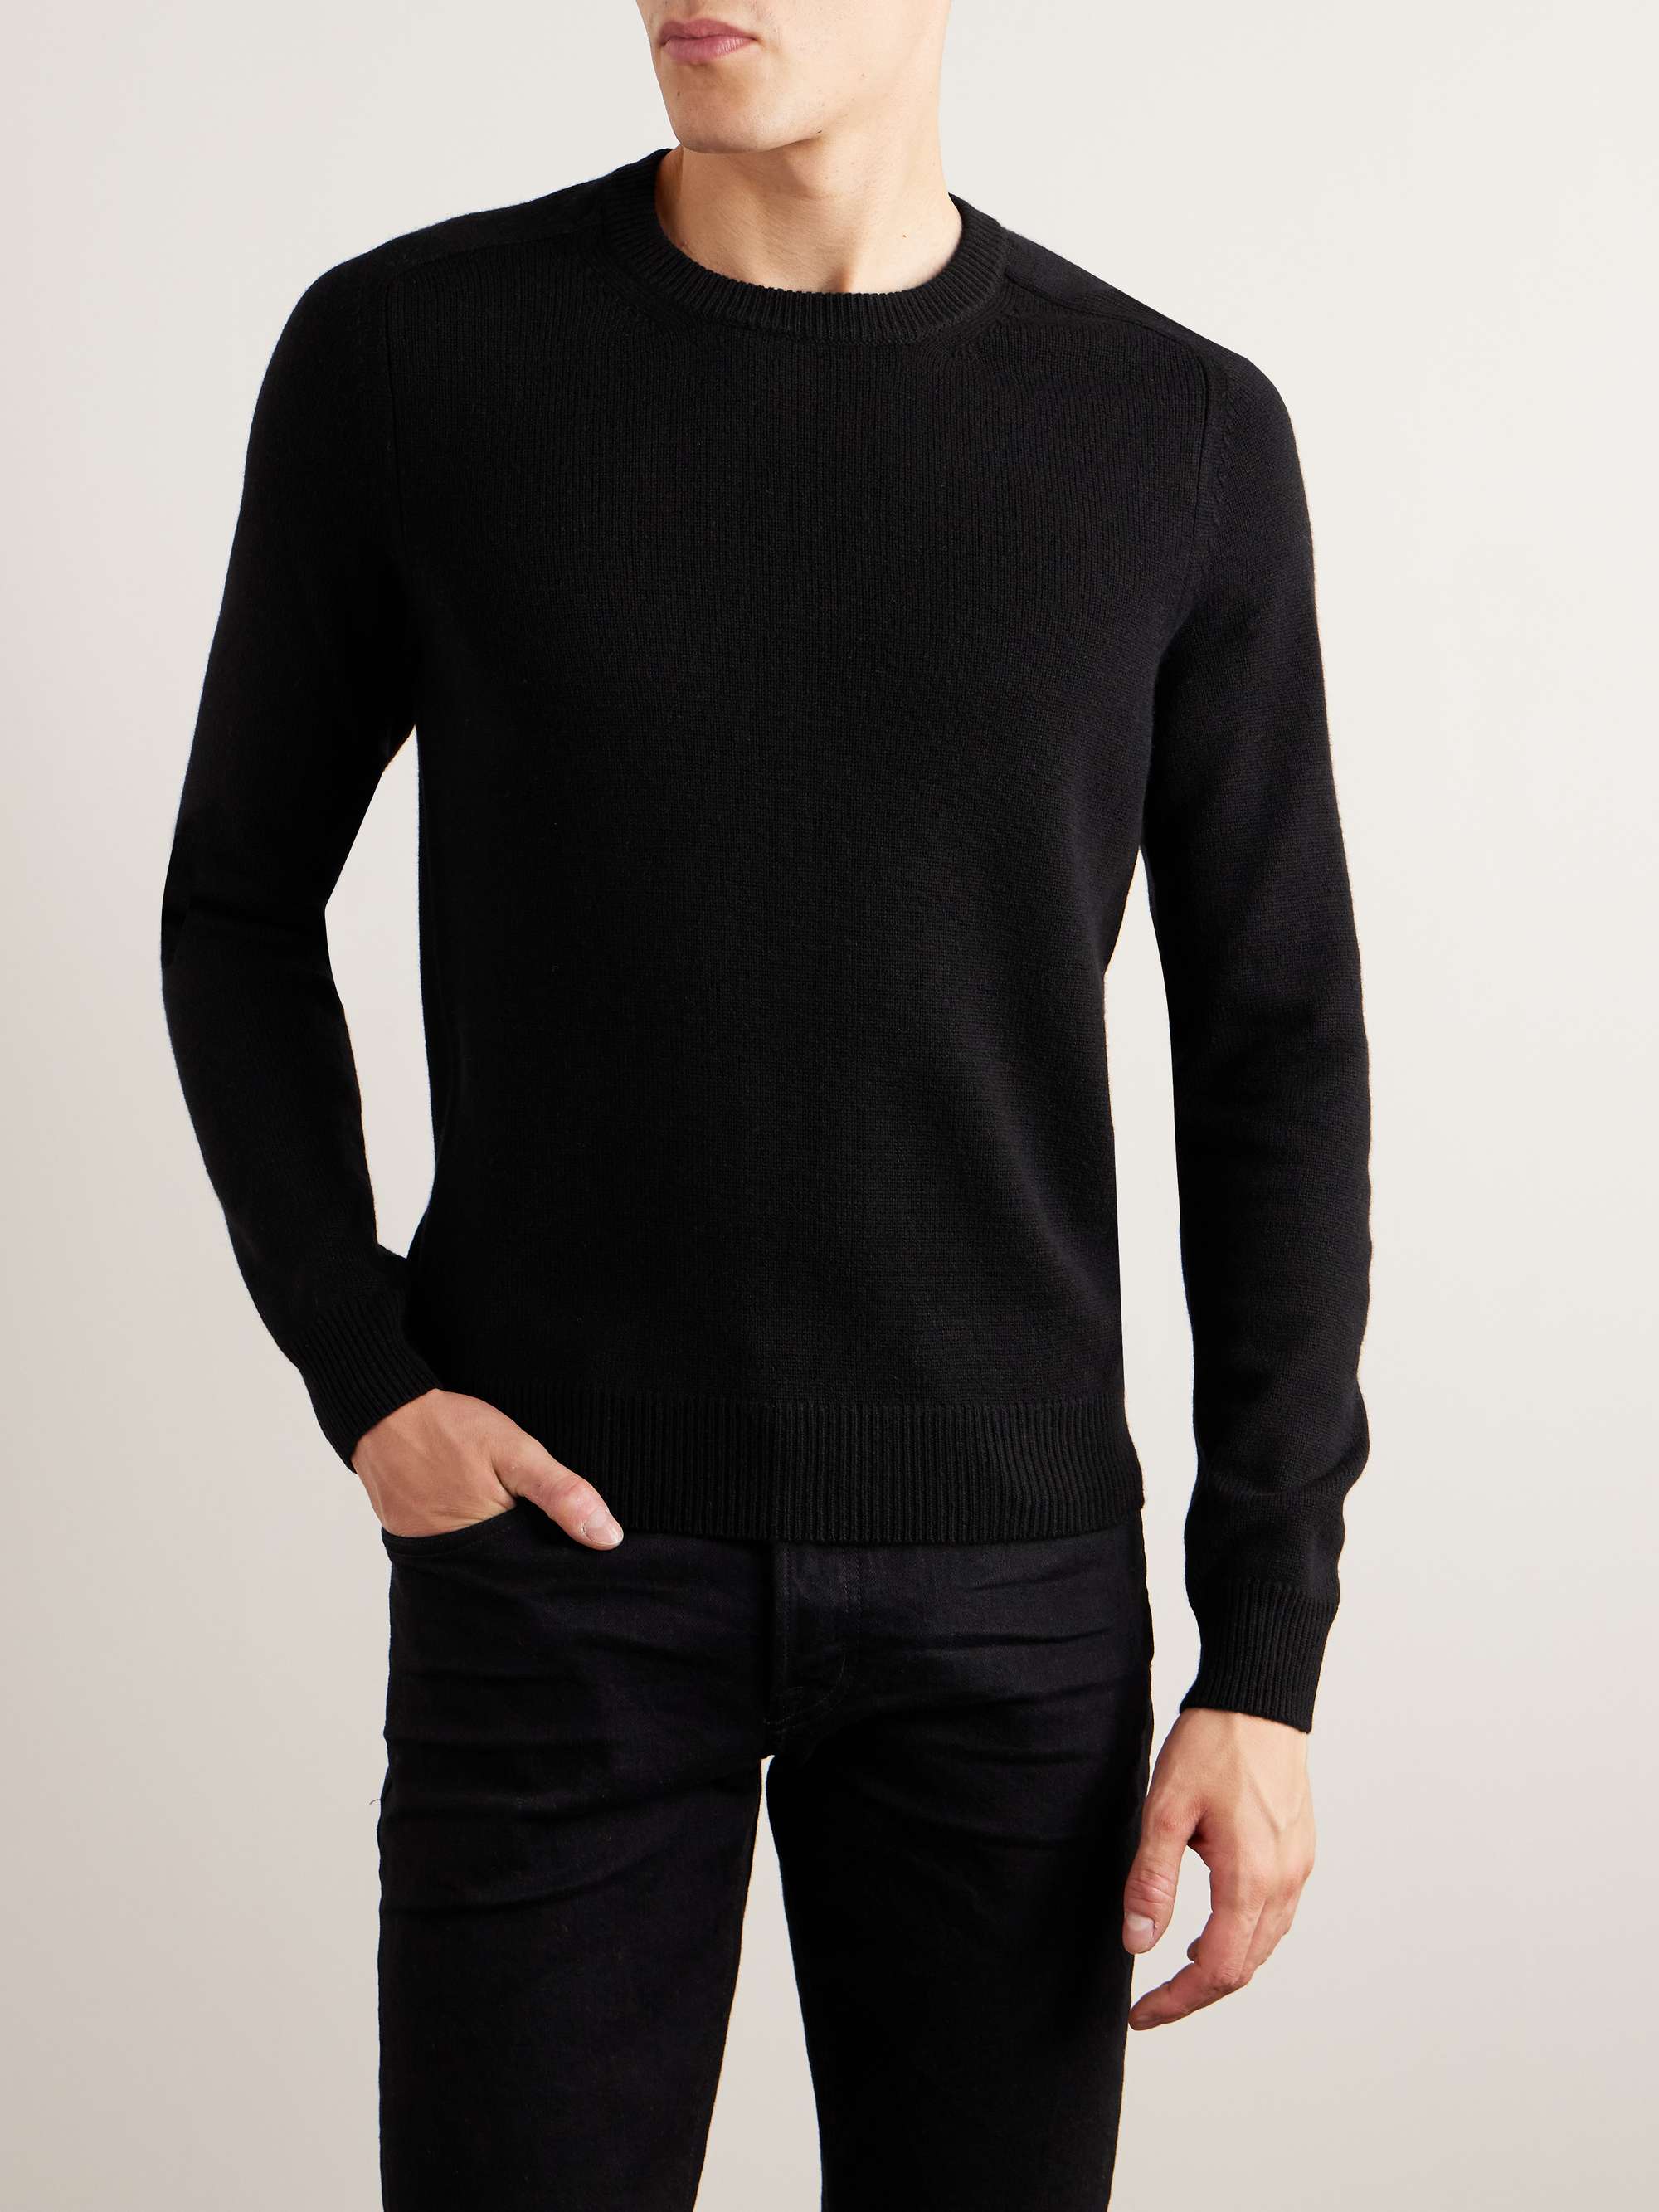 TOM FORD Cashmere Sweater for Men | MR PORTER